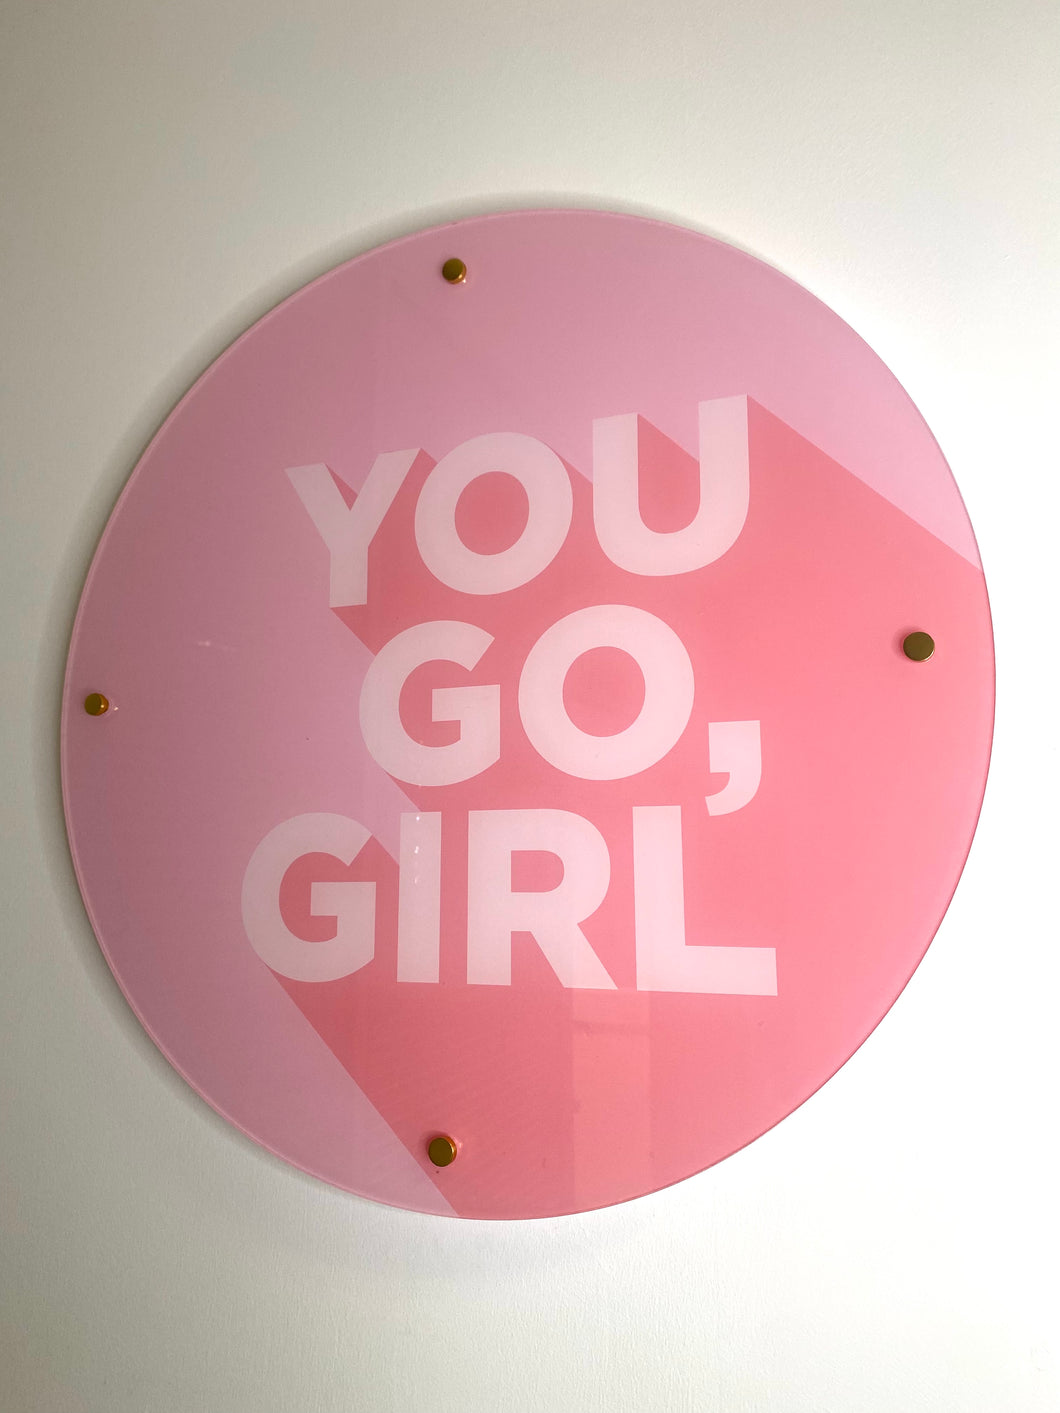 YOU GO GIRL - Acrylic Wall Sign